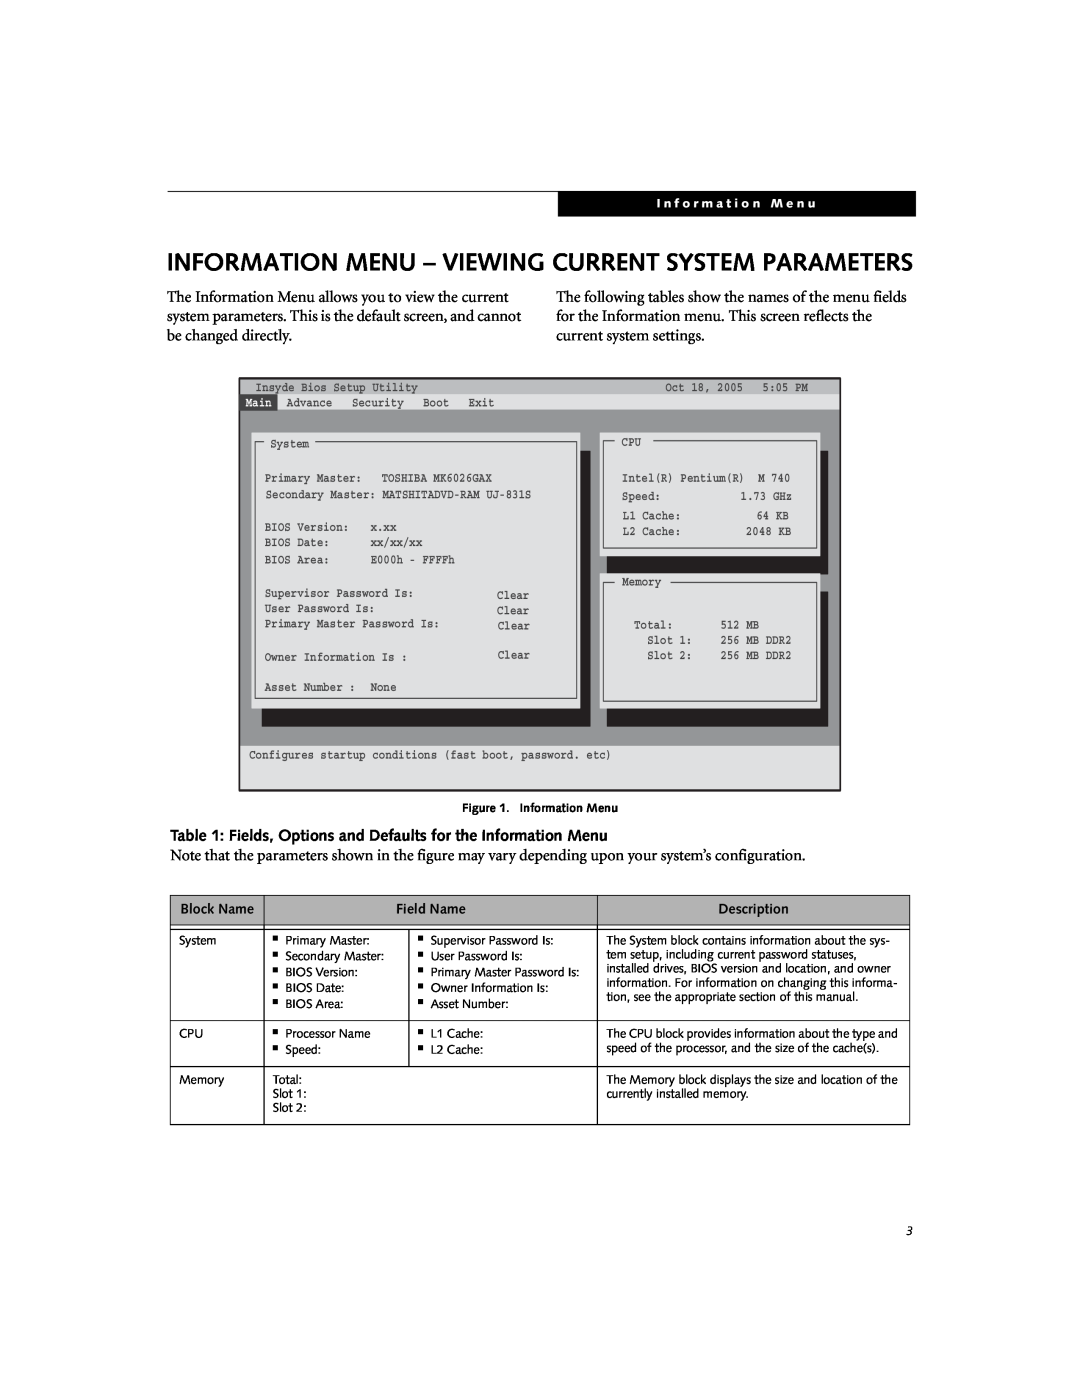 Fujitsu Siemens Computers N3520 manual Information Menu - Viewing Current System Parameters 